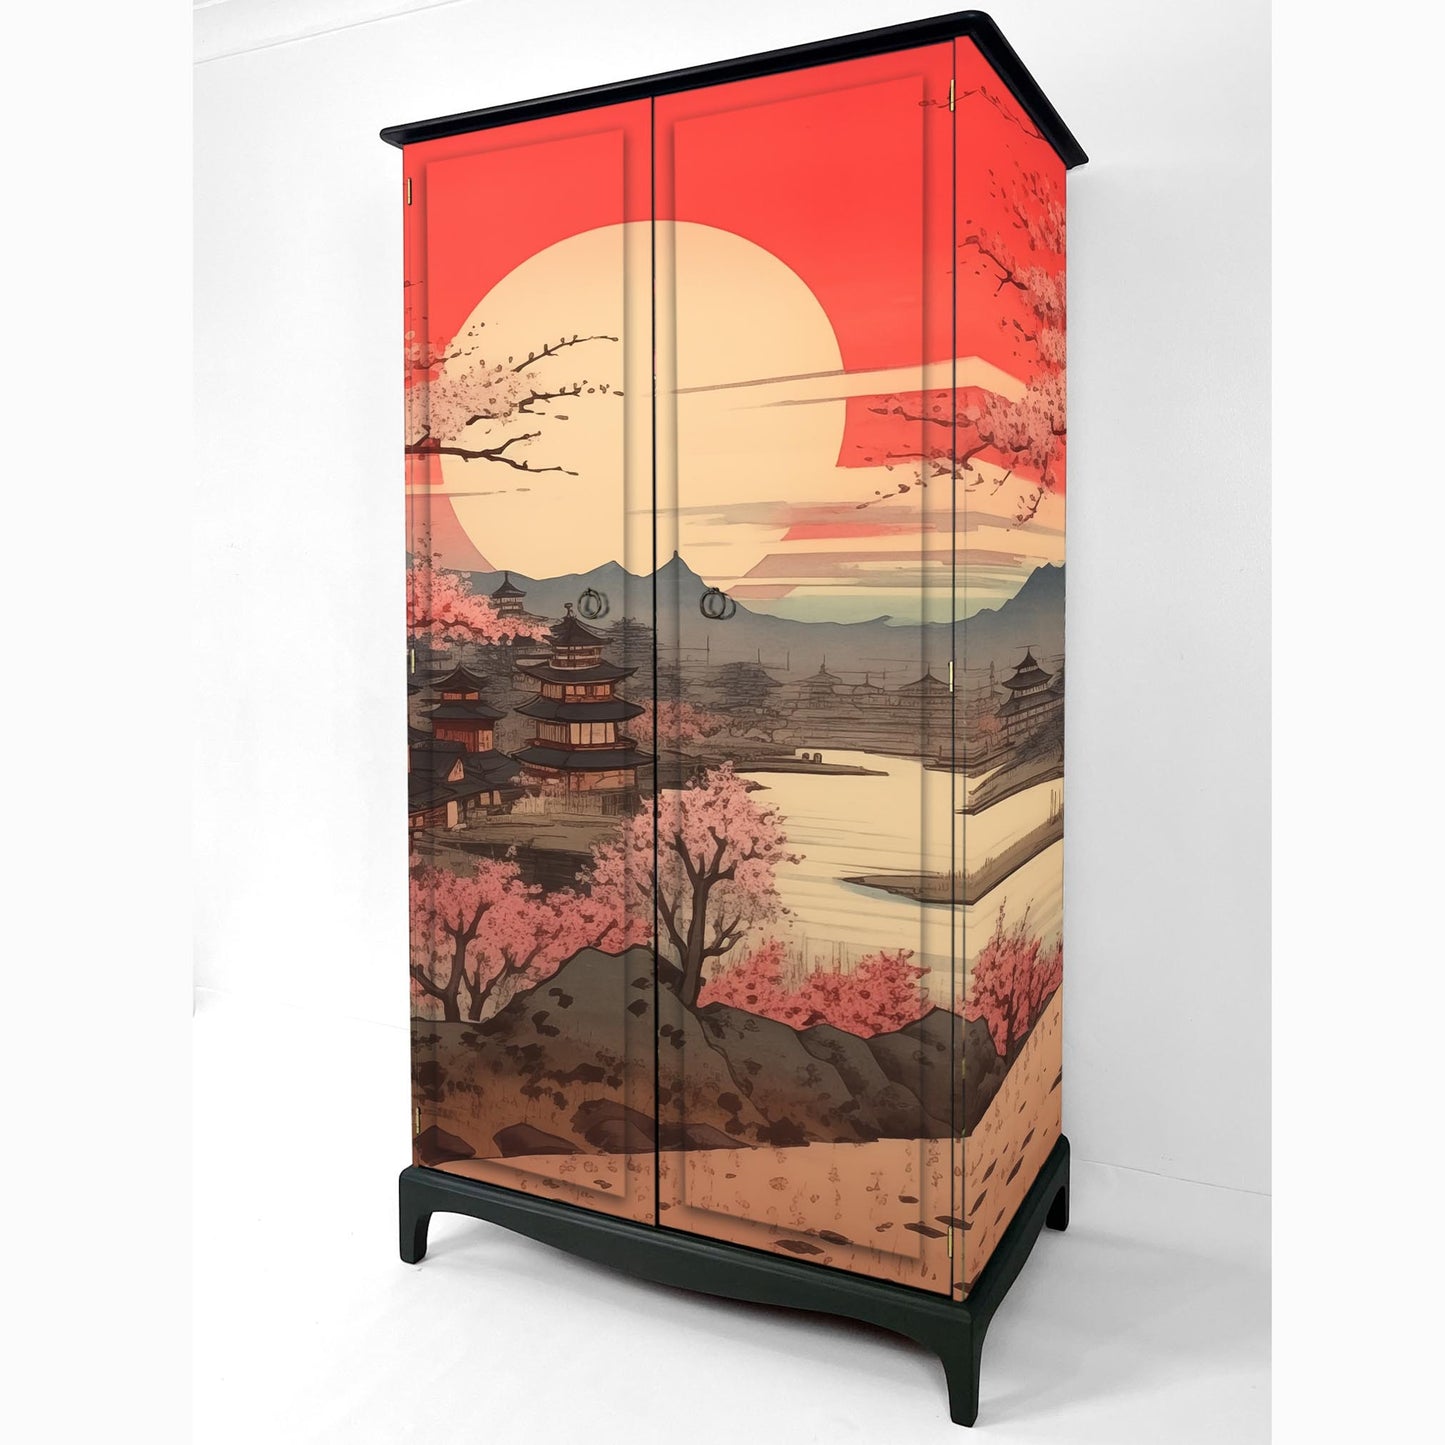 Upcycled vintage wardrobe with opulent Japanese art